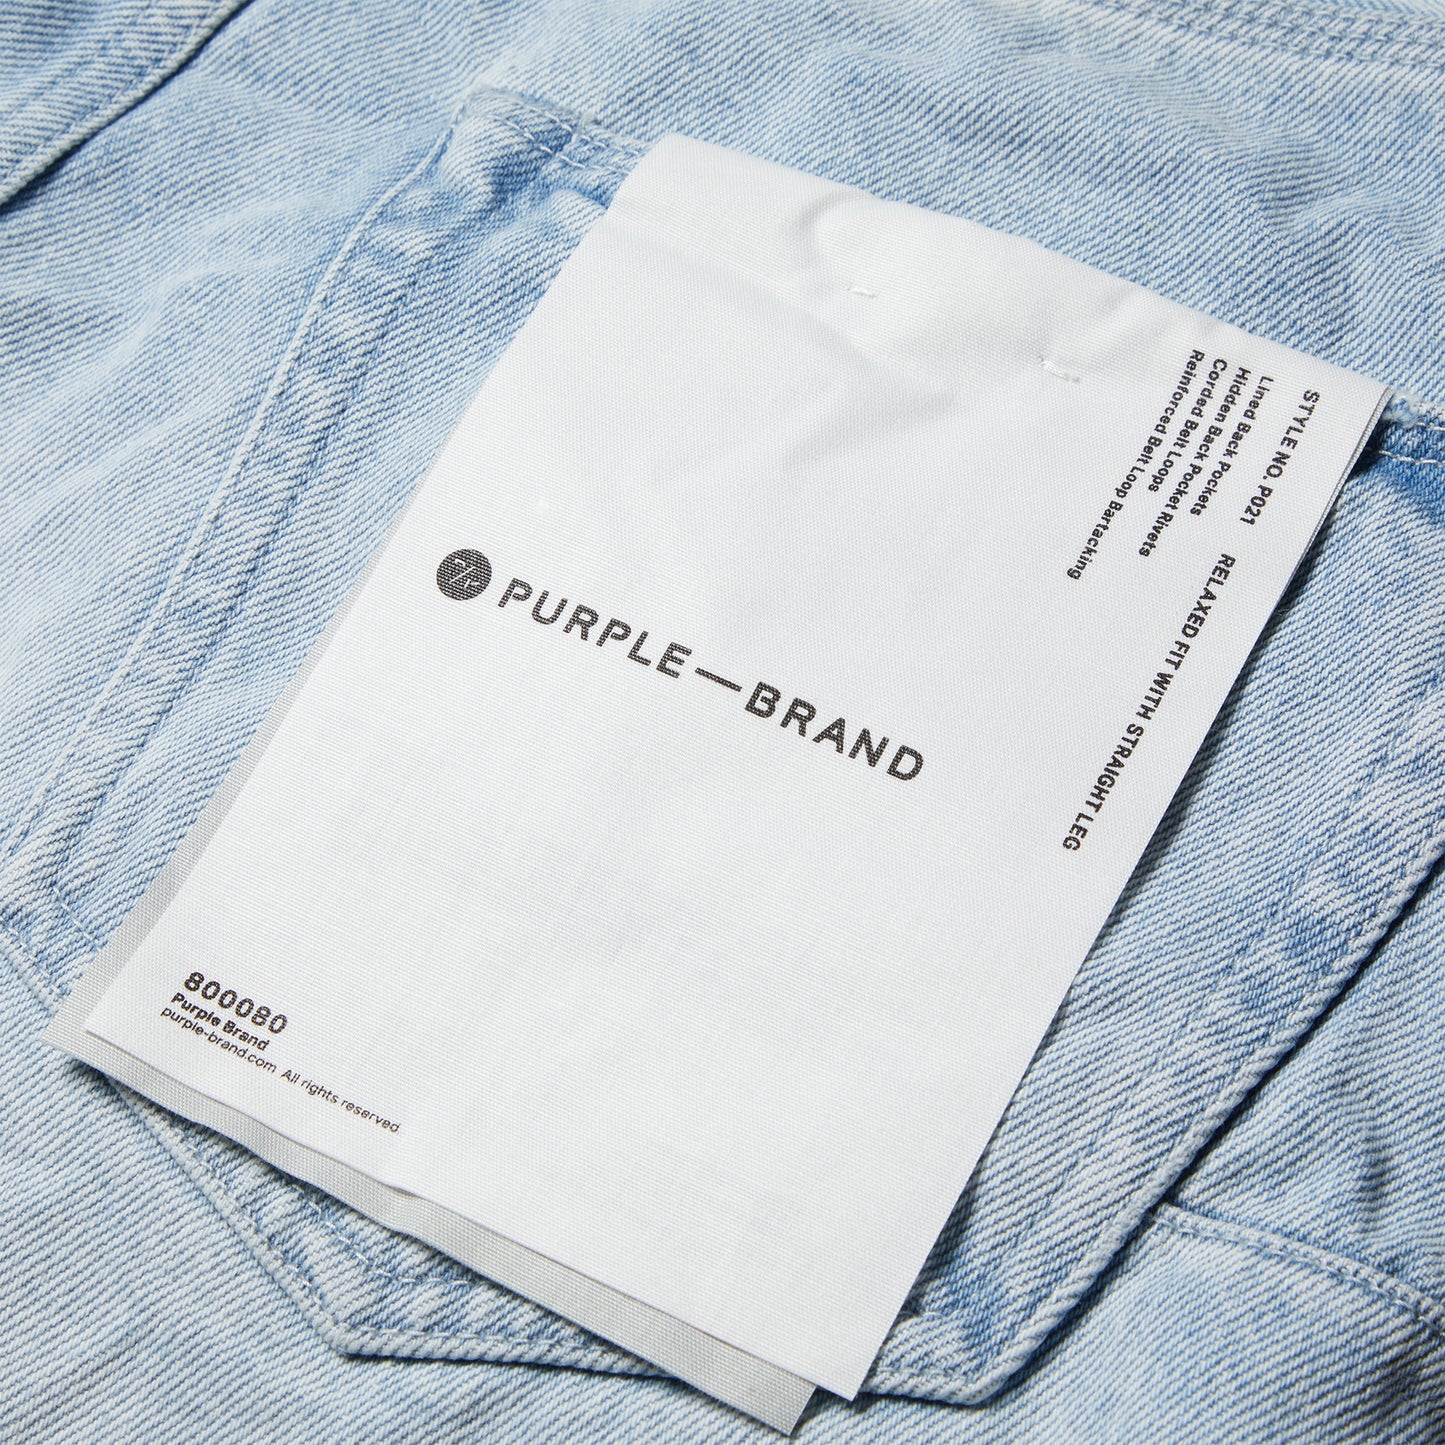 PURPLE Brand Bleached Side Zip Shorts (Light Indigo)